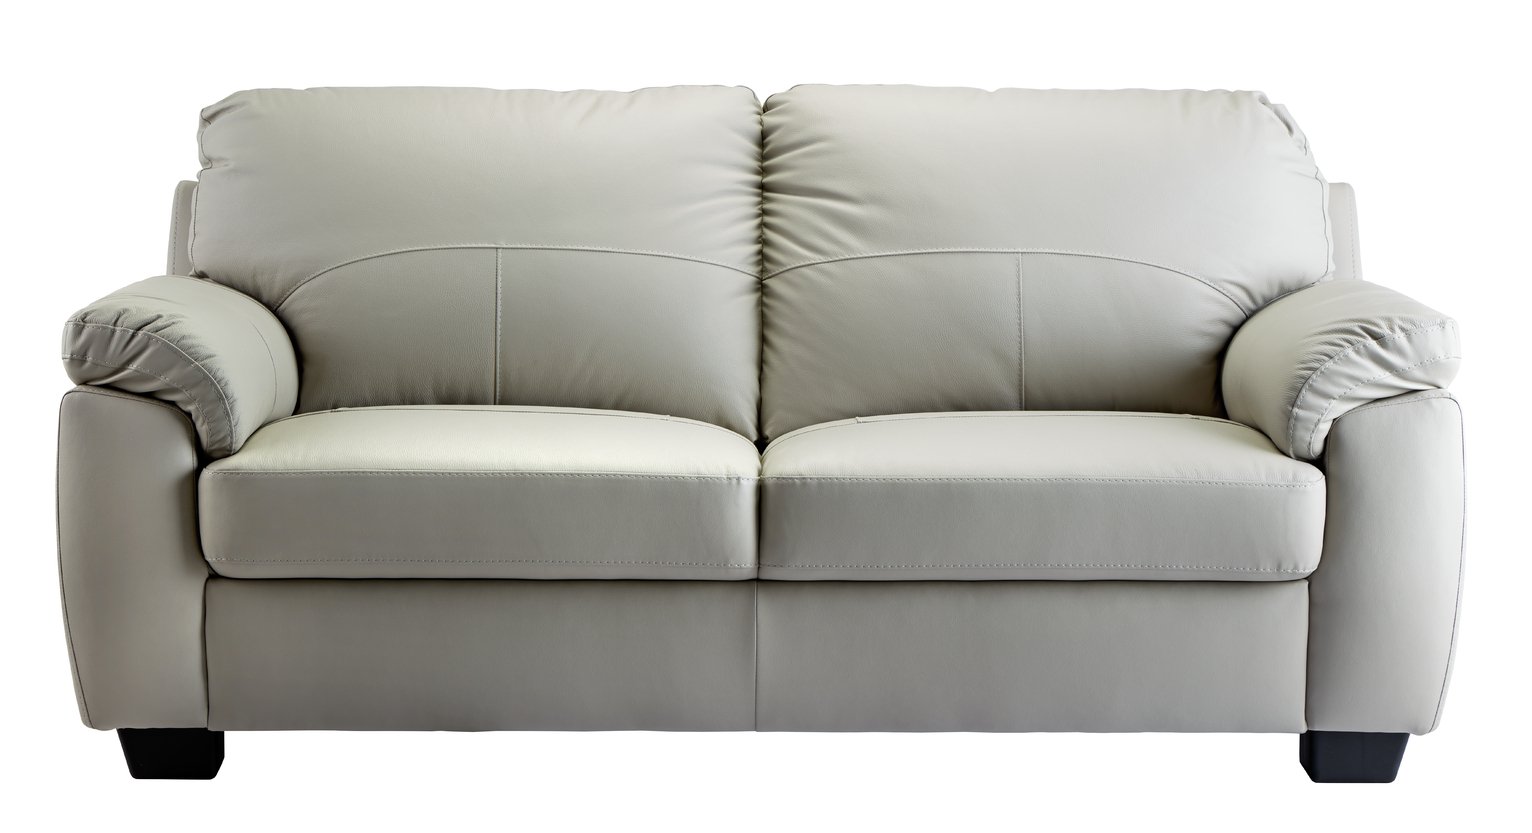 logan leather sofa argos